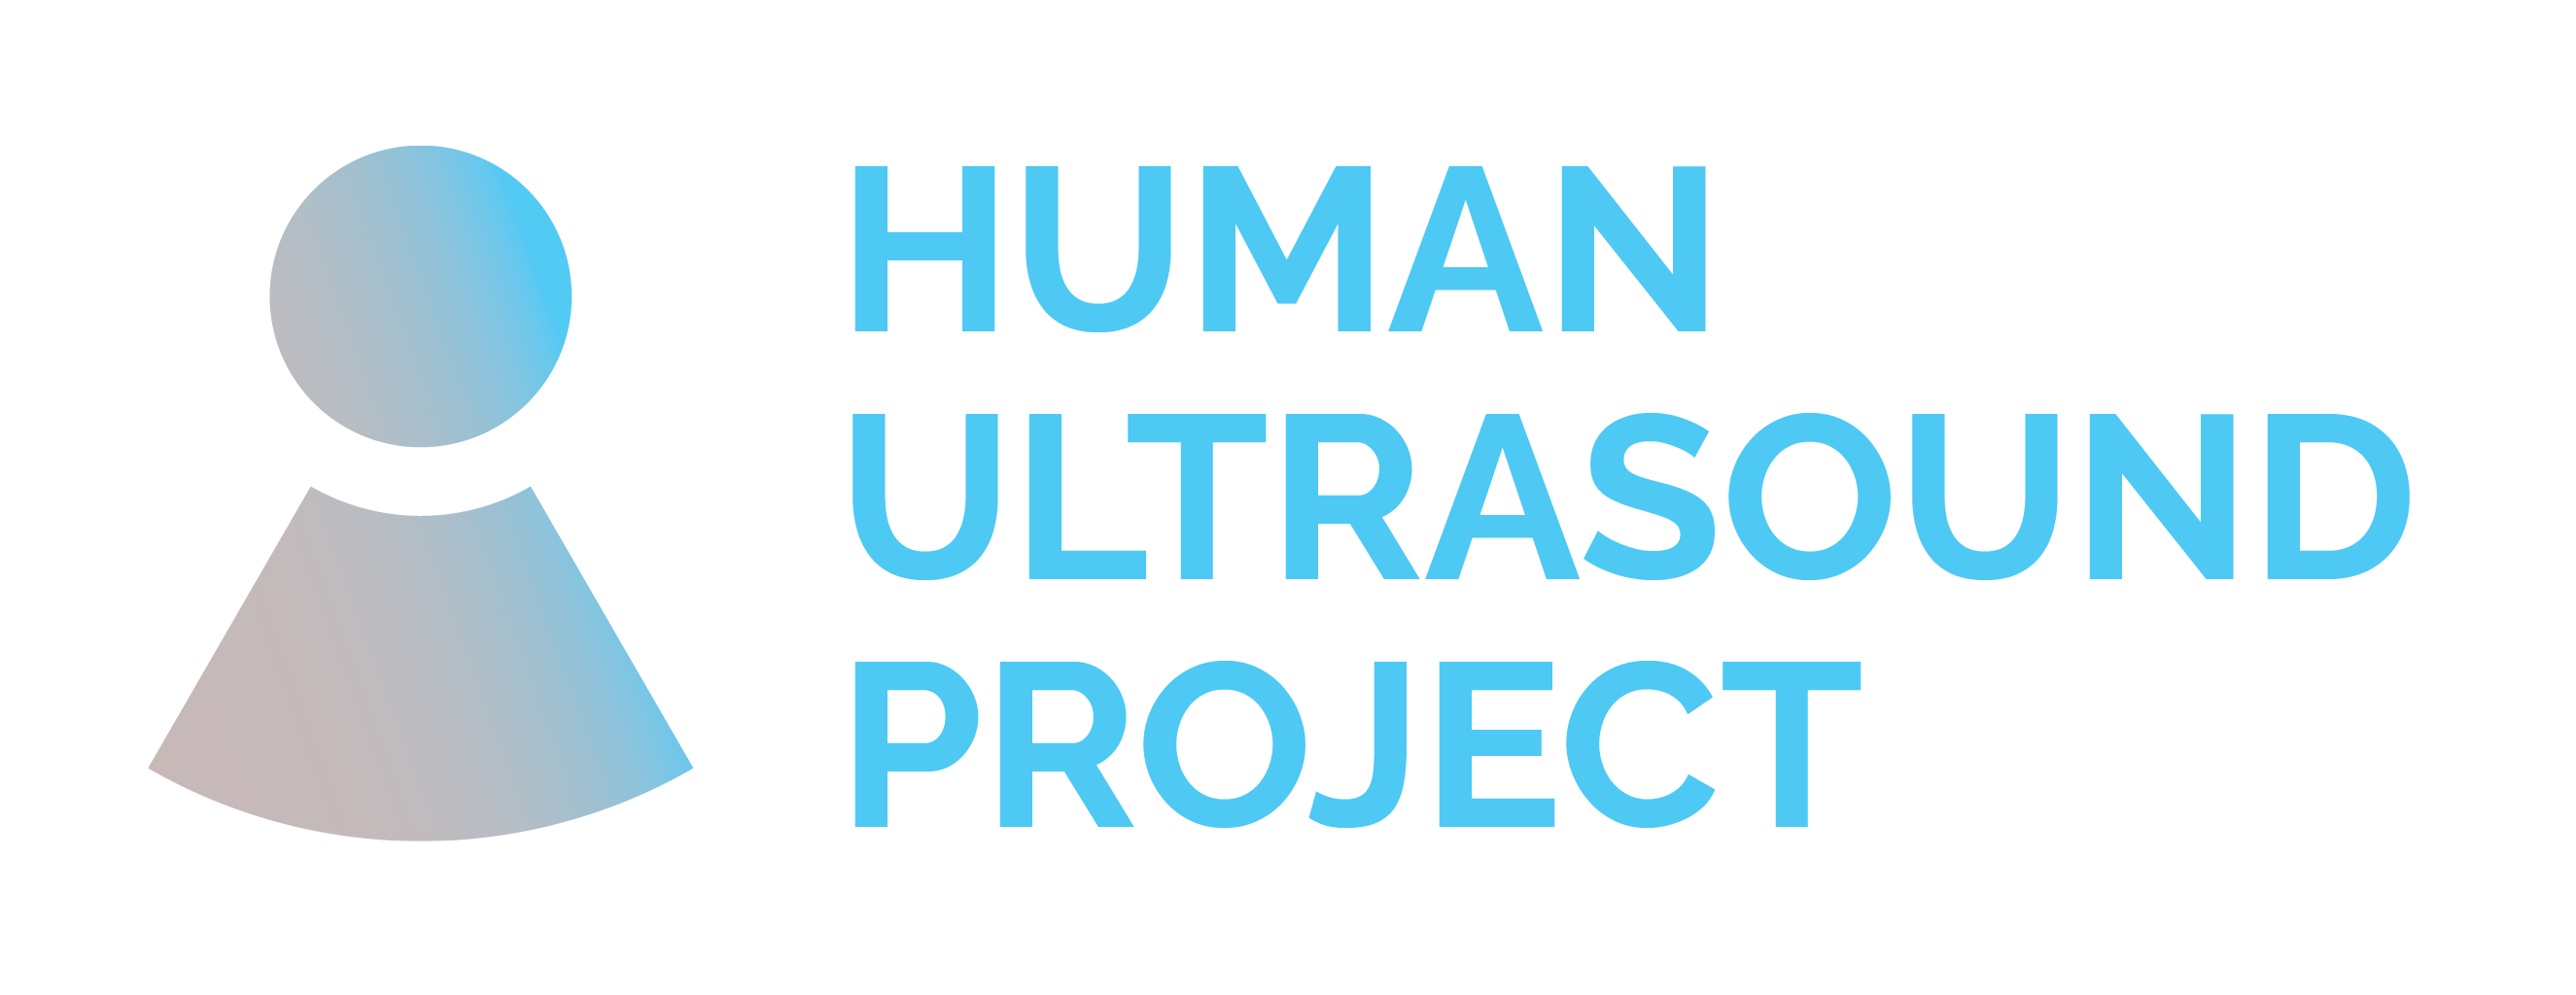 Human Ultrasound Project Logo